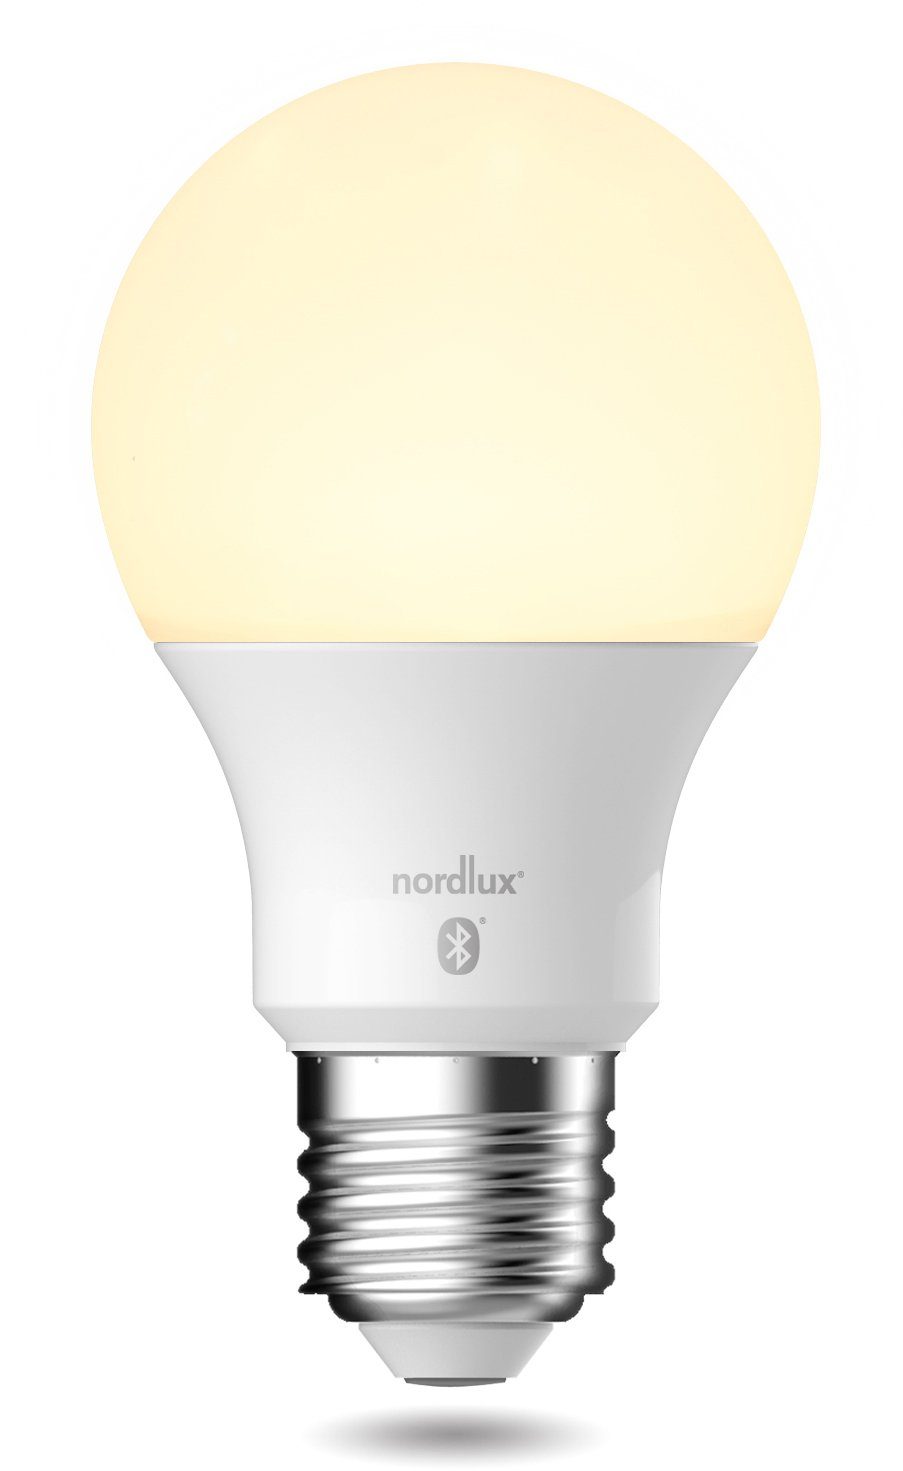 Nordlux LED-Leuchtmittel Smartlight Starter Kit, 3 Wifi Steuerbar, Farbwechsler, Lichtfarbe, E27, Bluetooth oder St., Lichtstärke, Home Smart mit